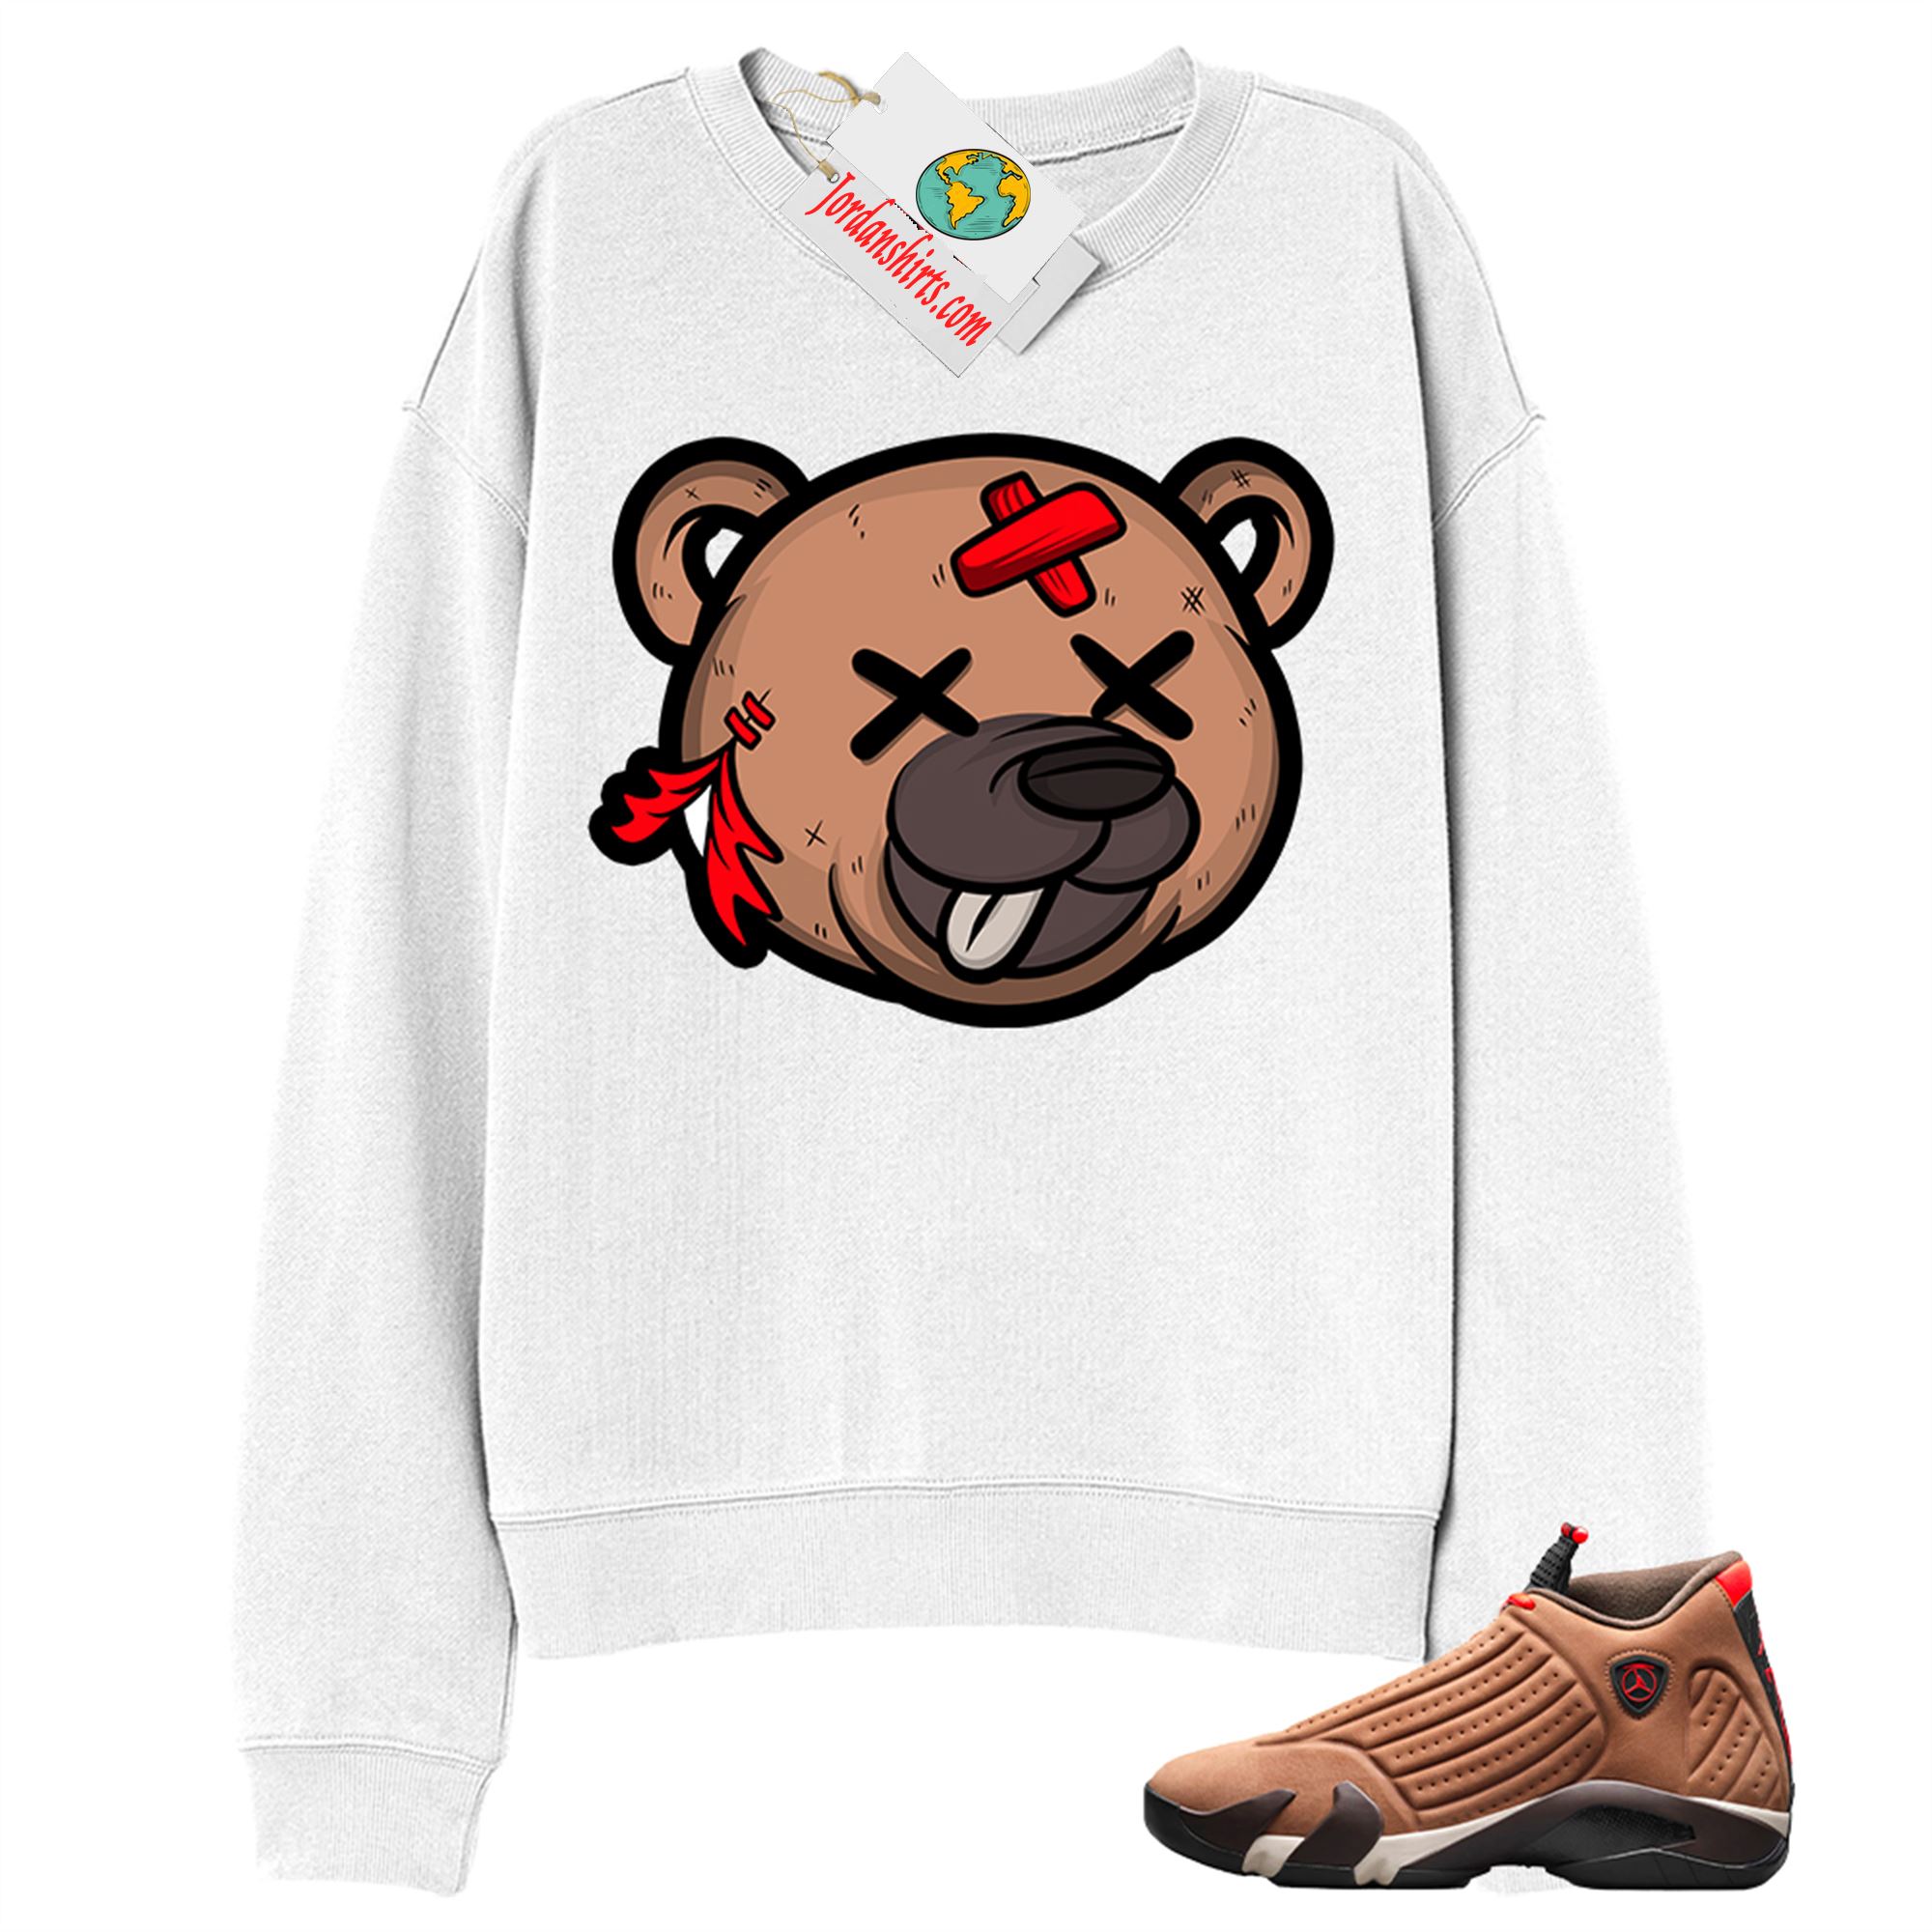 Jordan 14 Sweatshirt, Teddy Bear Head White Sweatshirt Air Jordan 14 Winterized 14s Full Size Up To 5xl